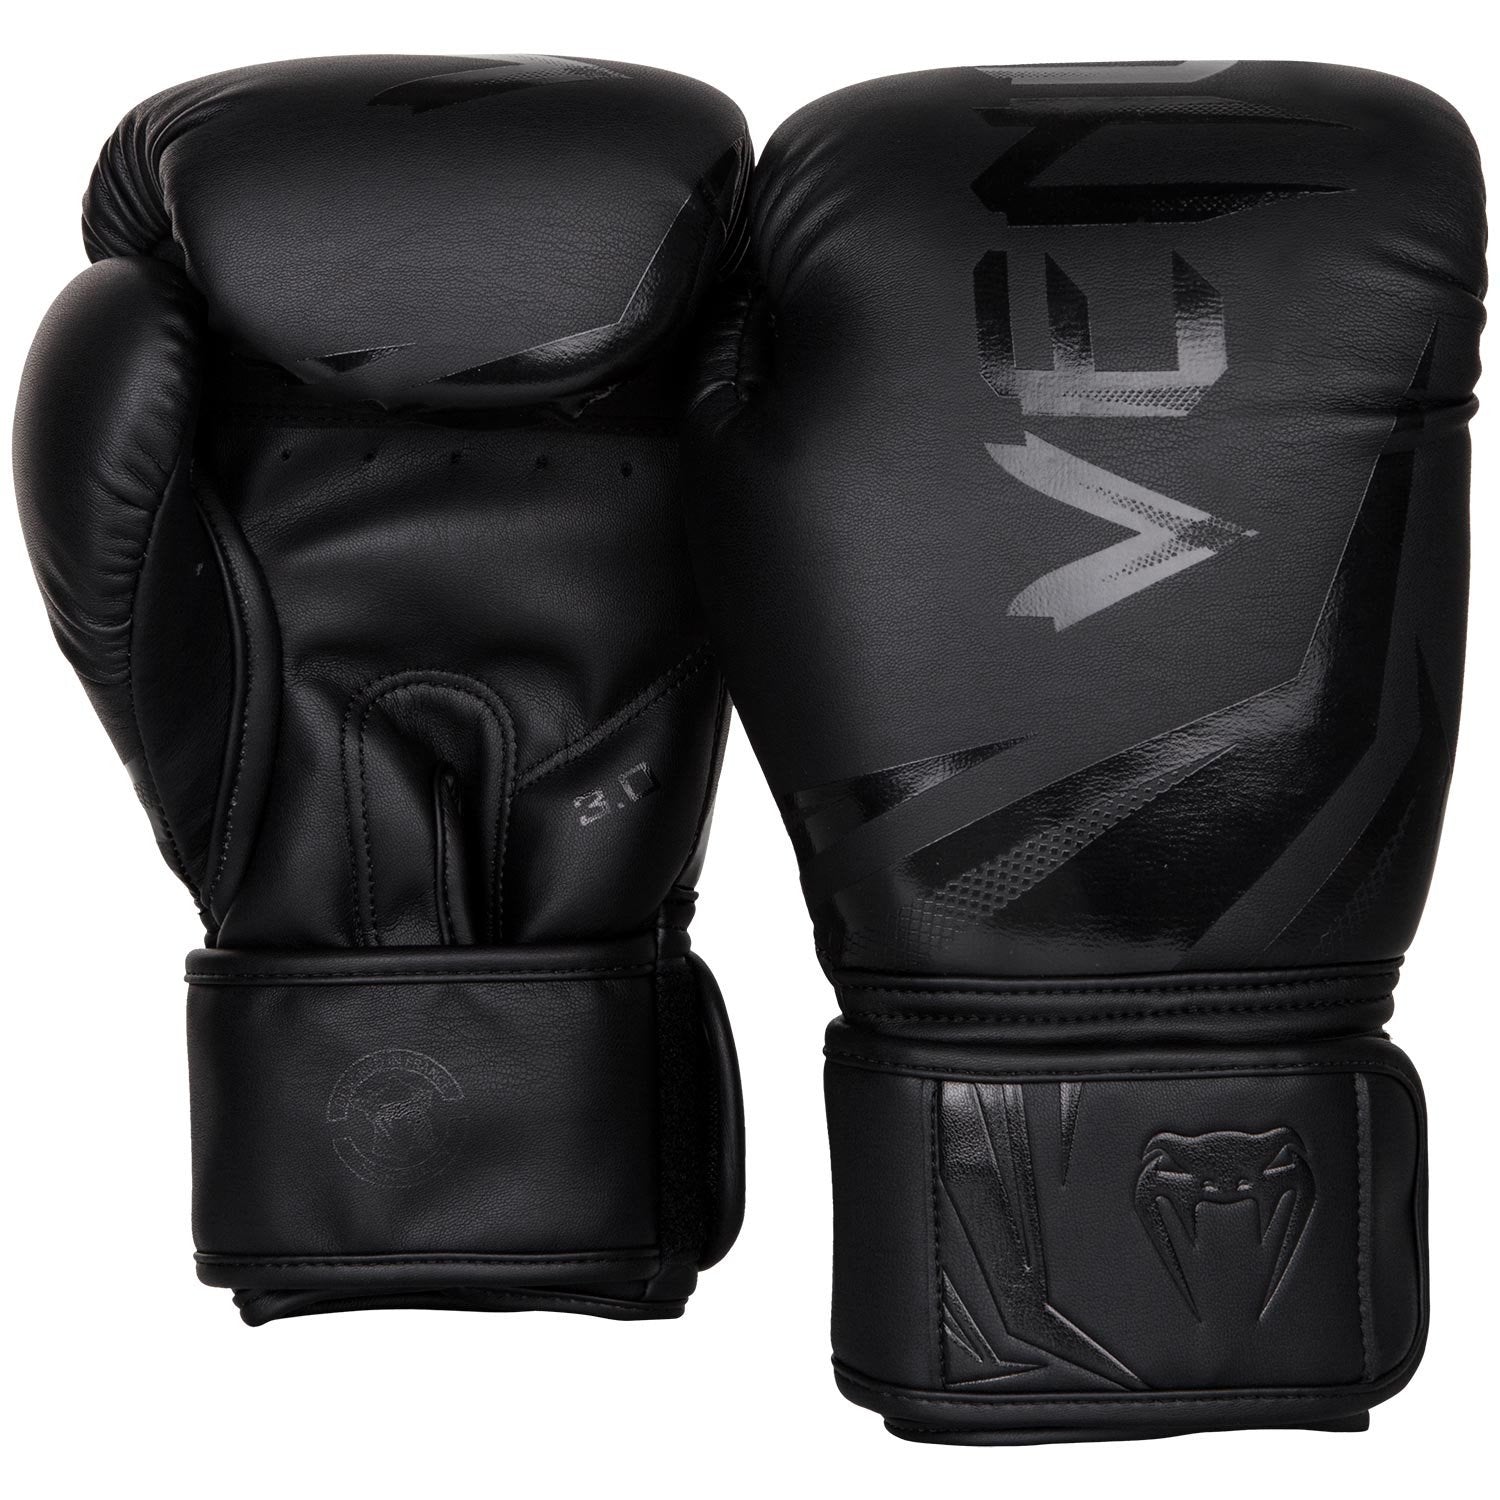 Venum Challenger 3.0 Boxing Gloves - Black/Black - Venum Asia